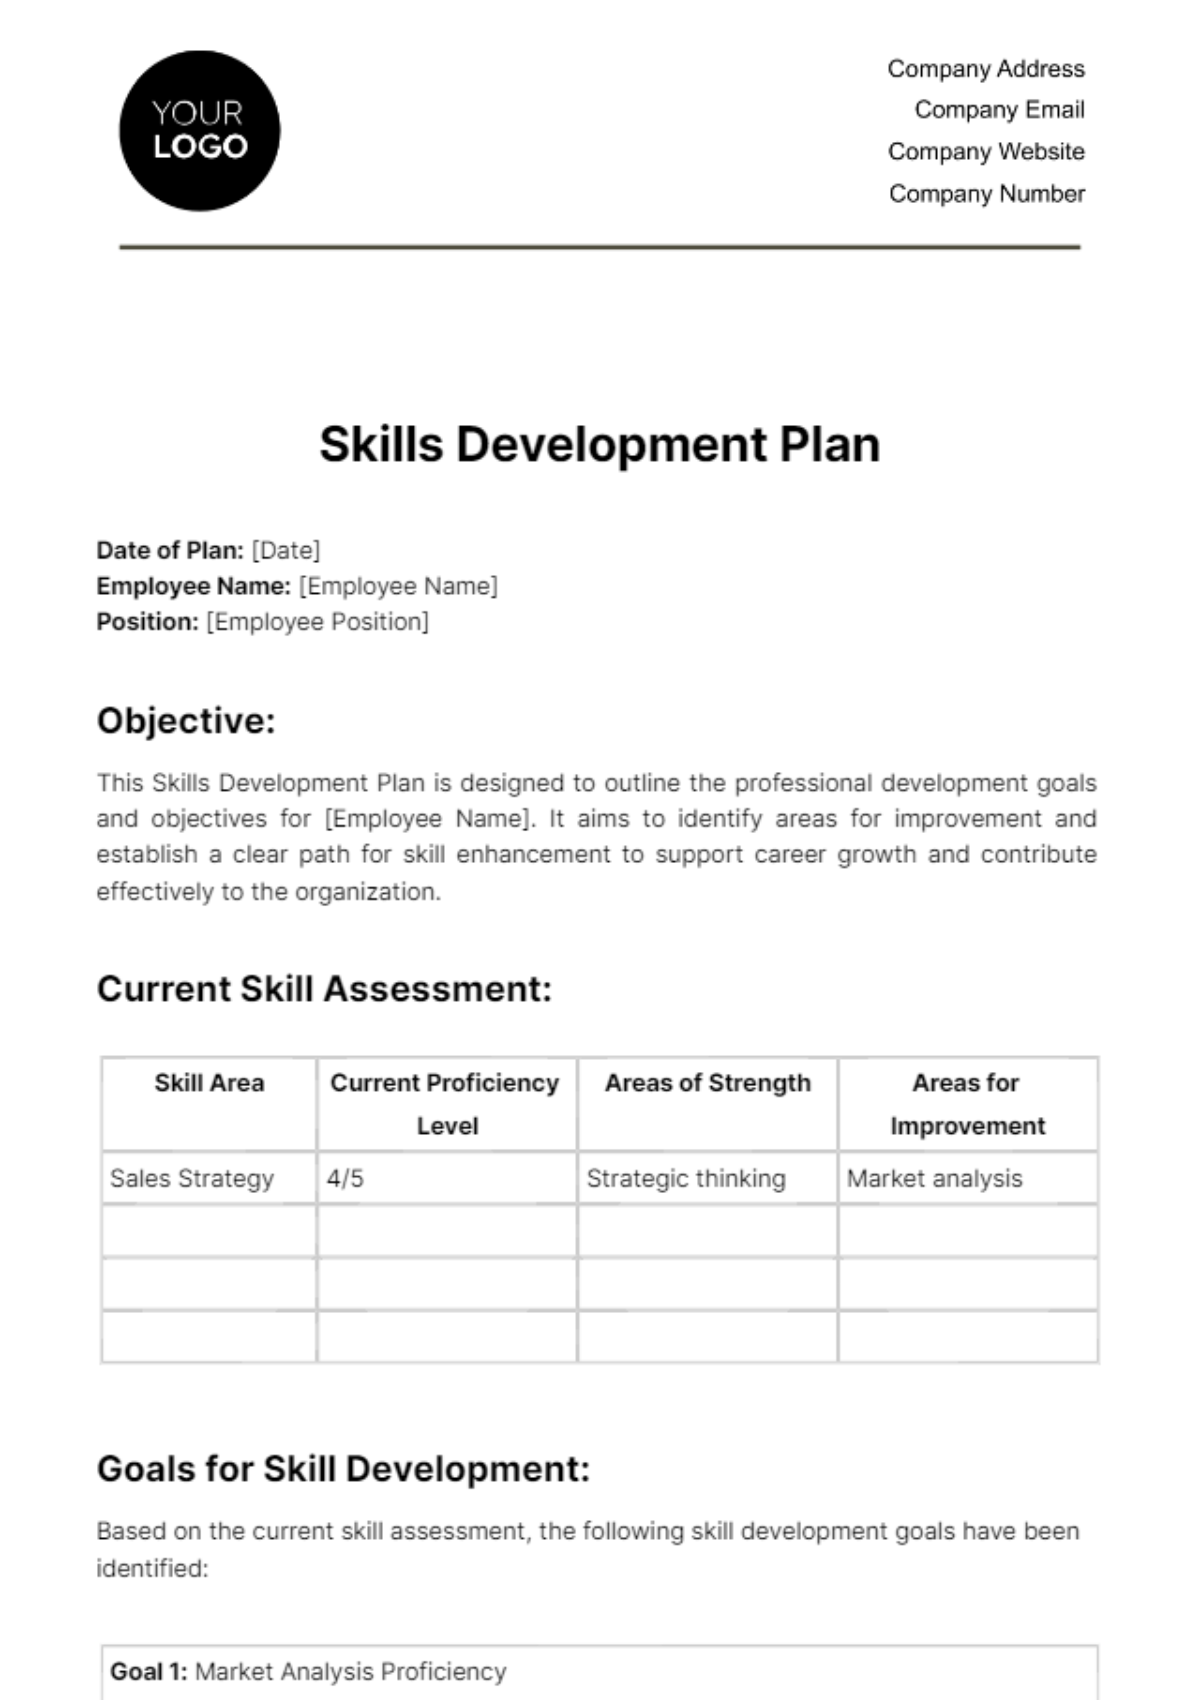 Skills Development Plan HR Template